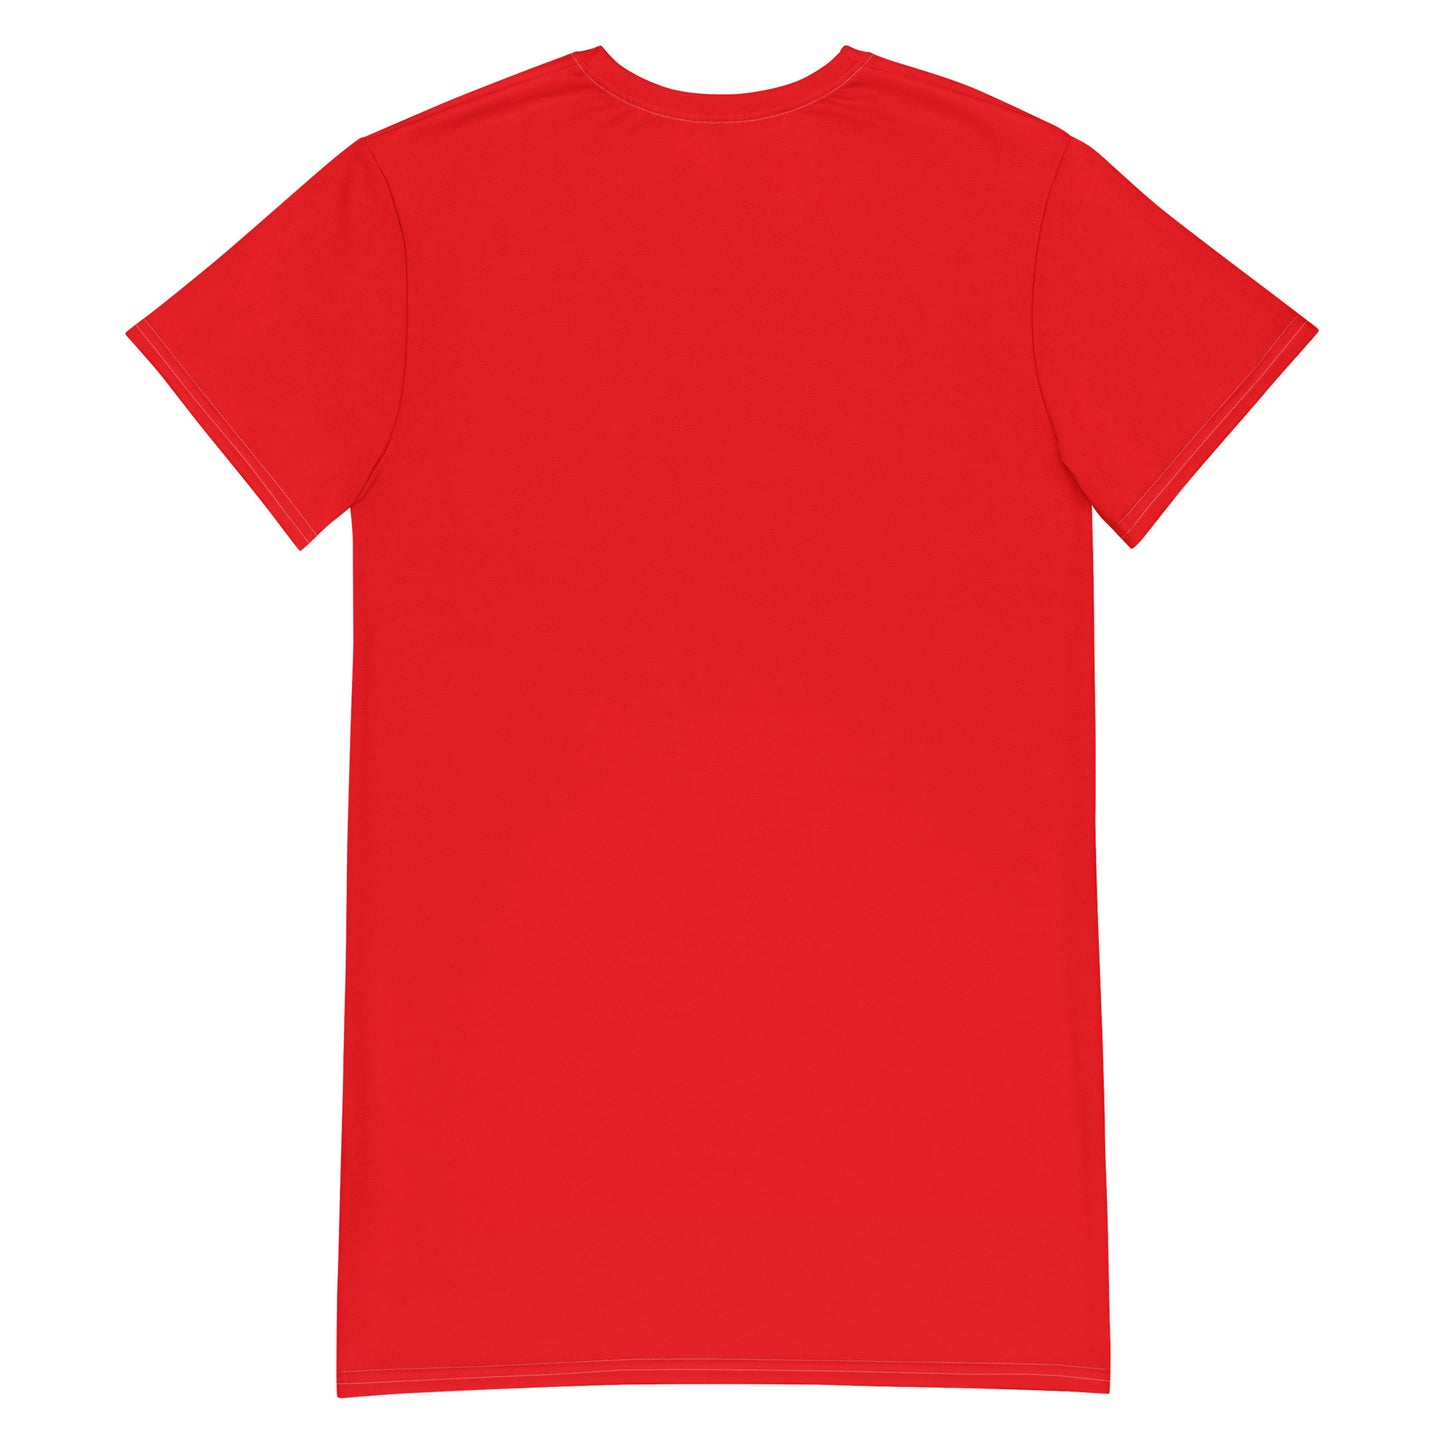 T-shirt Dress: I Love Me Sooo Much (red)